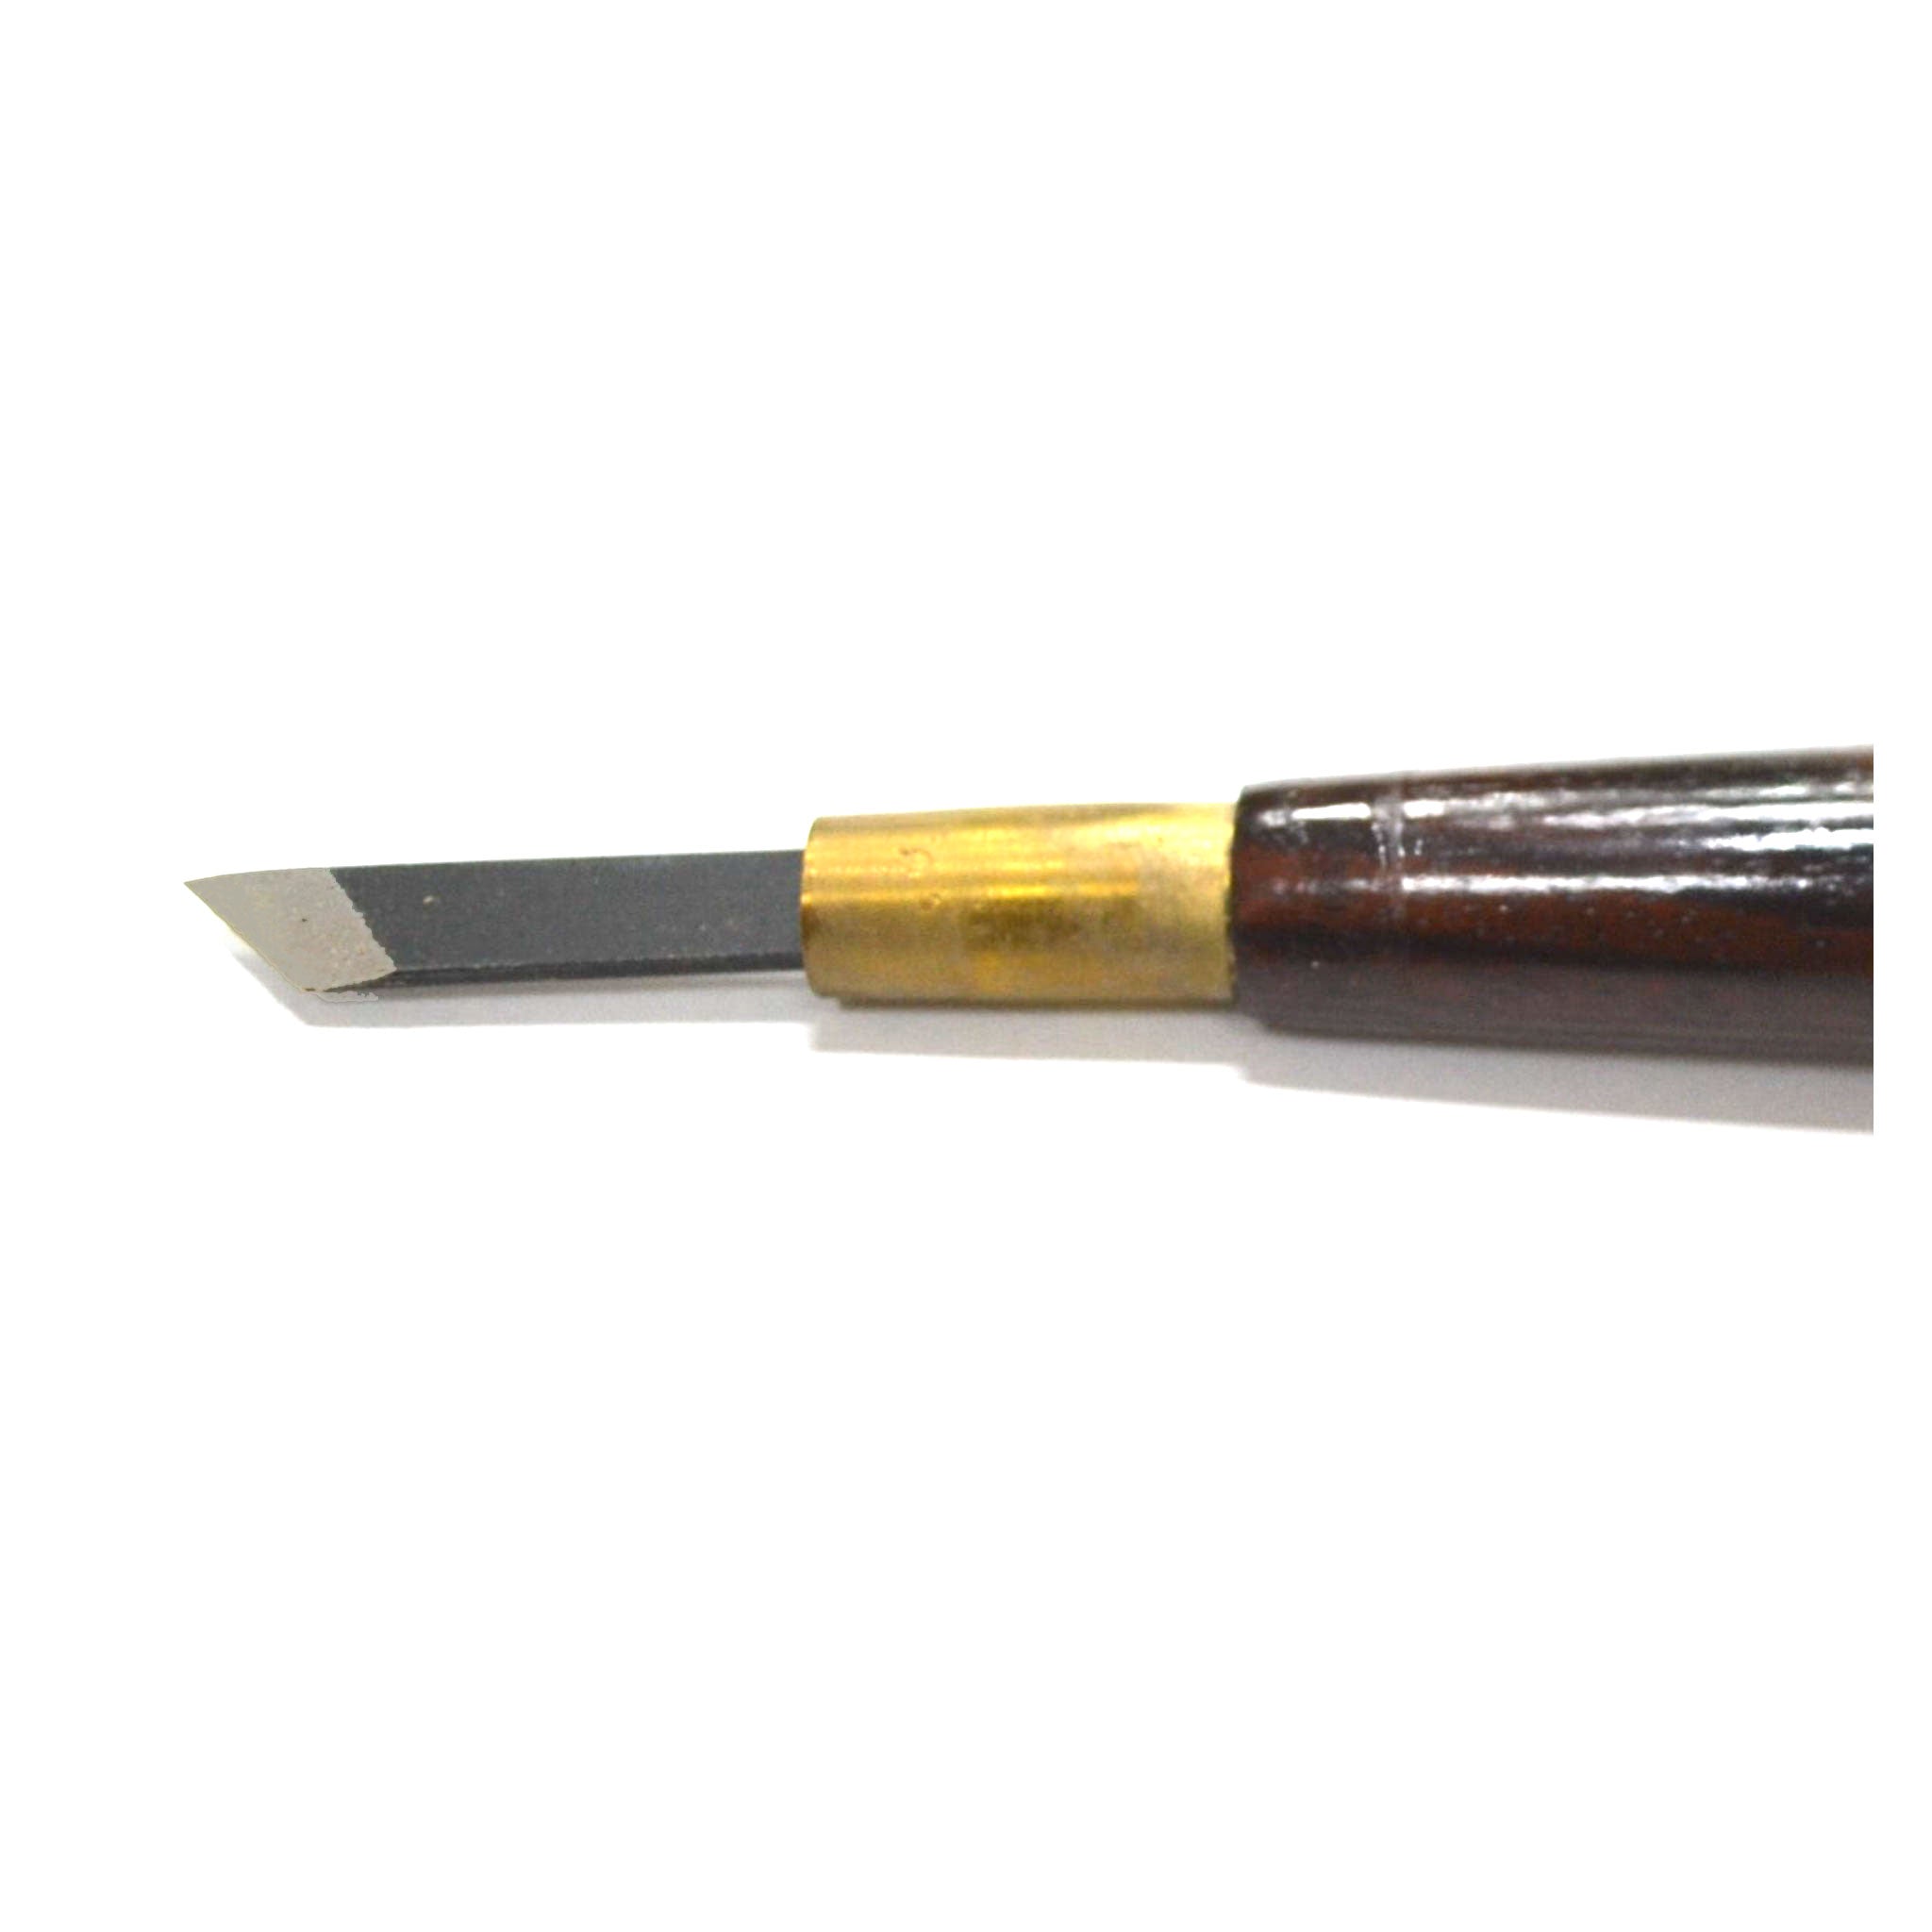 Togituna Brand Hangi-toh(Small knife)High Quality Left-hand